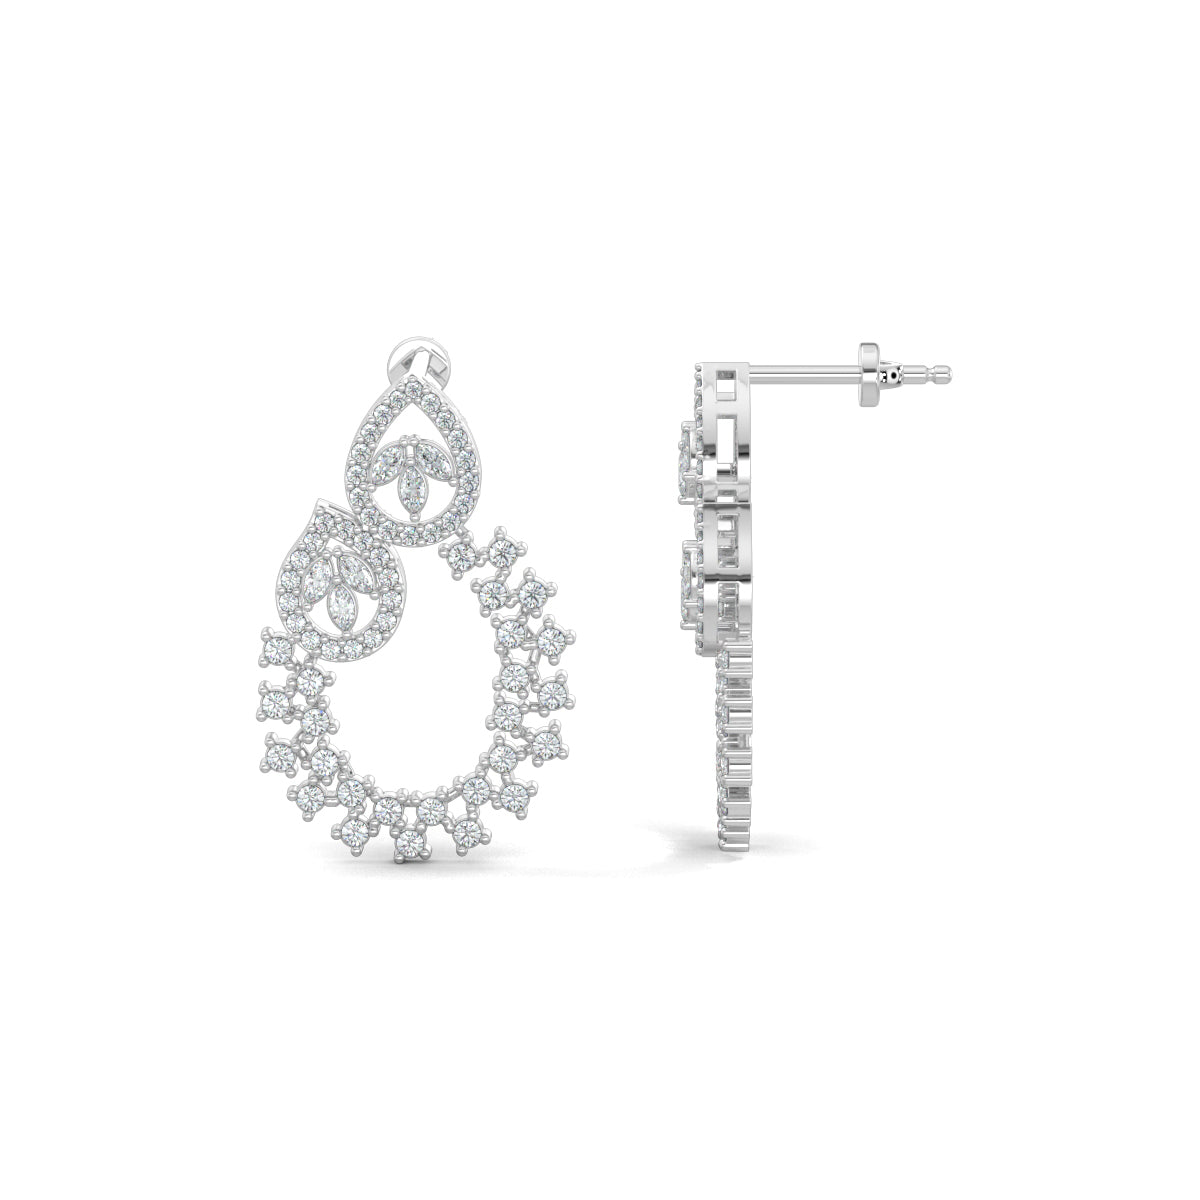 White Gold, Diamond Earrings, Natural diamond earrings, Lab-grown diamond earrings, traditional design earrings, mid-length diamond earrings, pear-shaped diamonds, oval diamond earrings, marquise-cut diamonds, round diamonds, elegant diamond jewelry